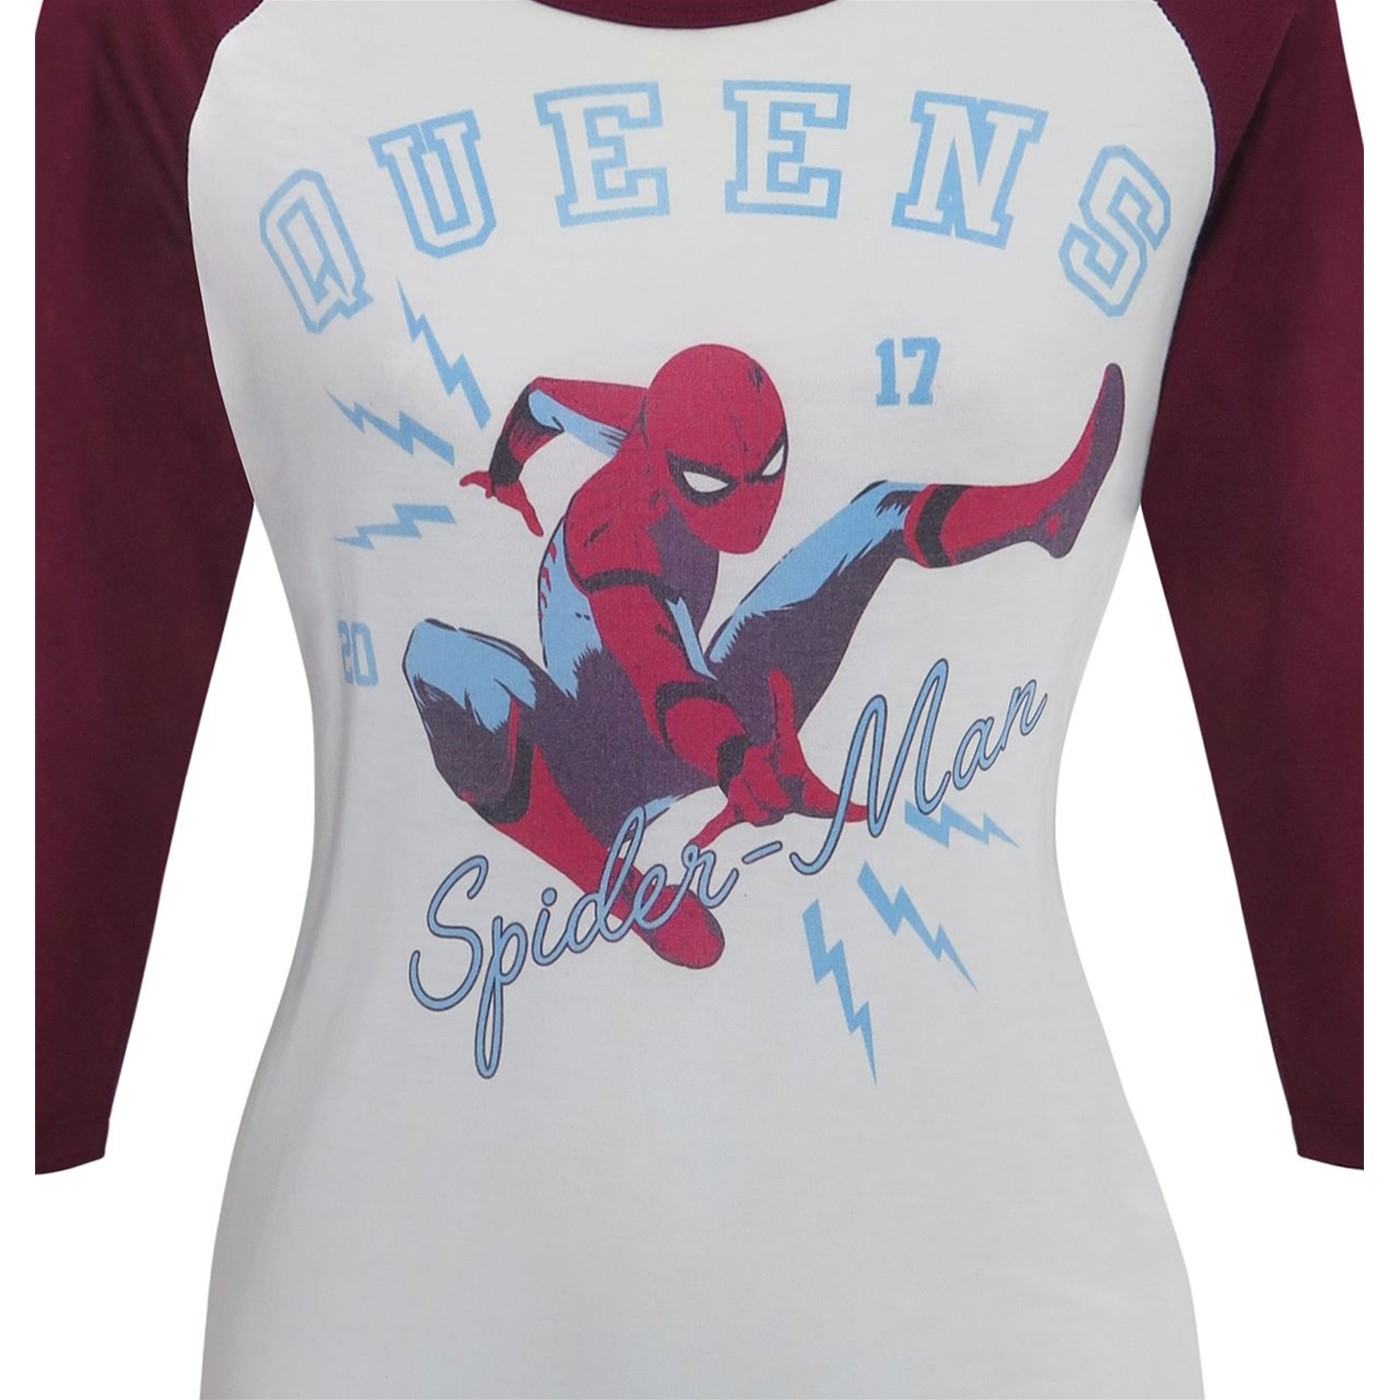 Spider-Man Homecoming Women's Baseball T-Shirt